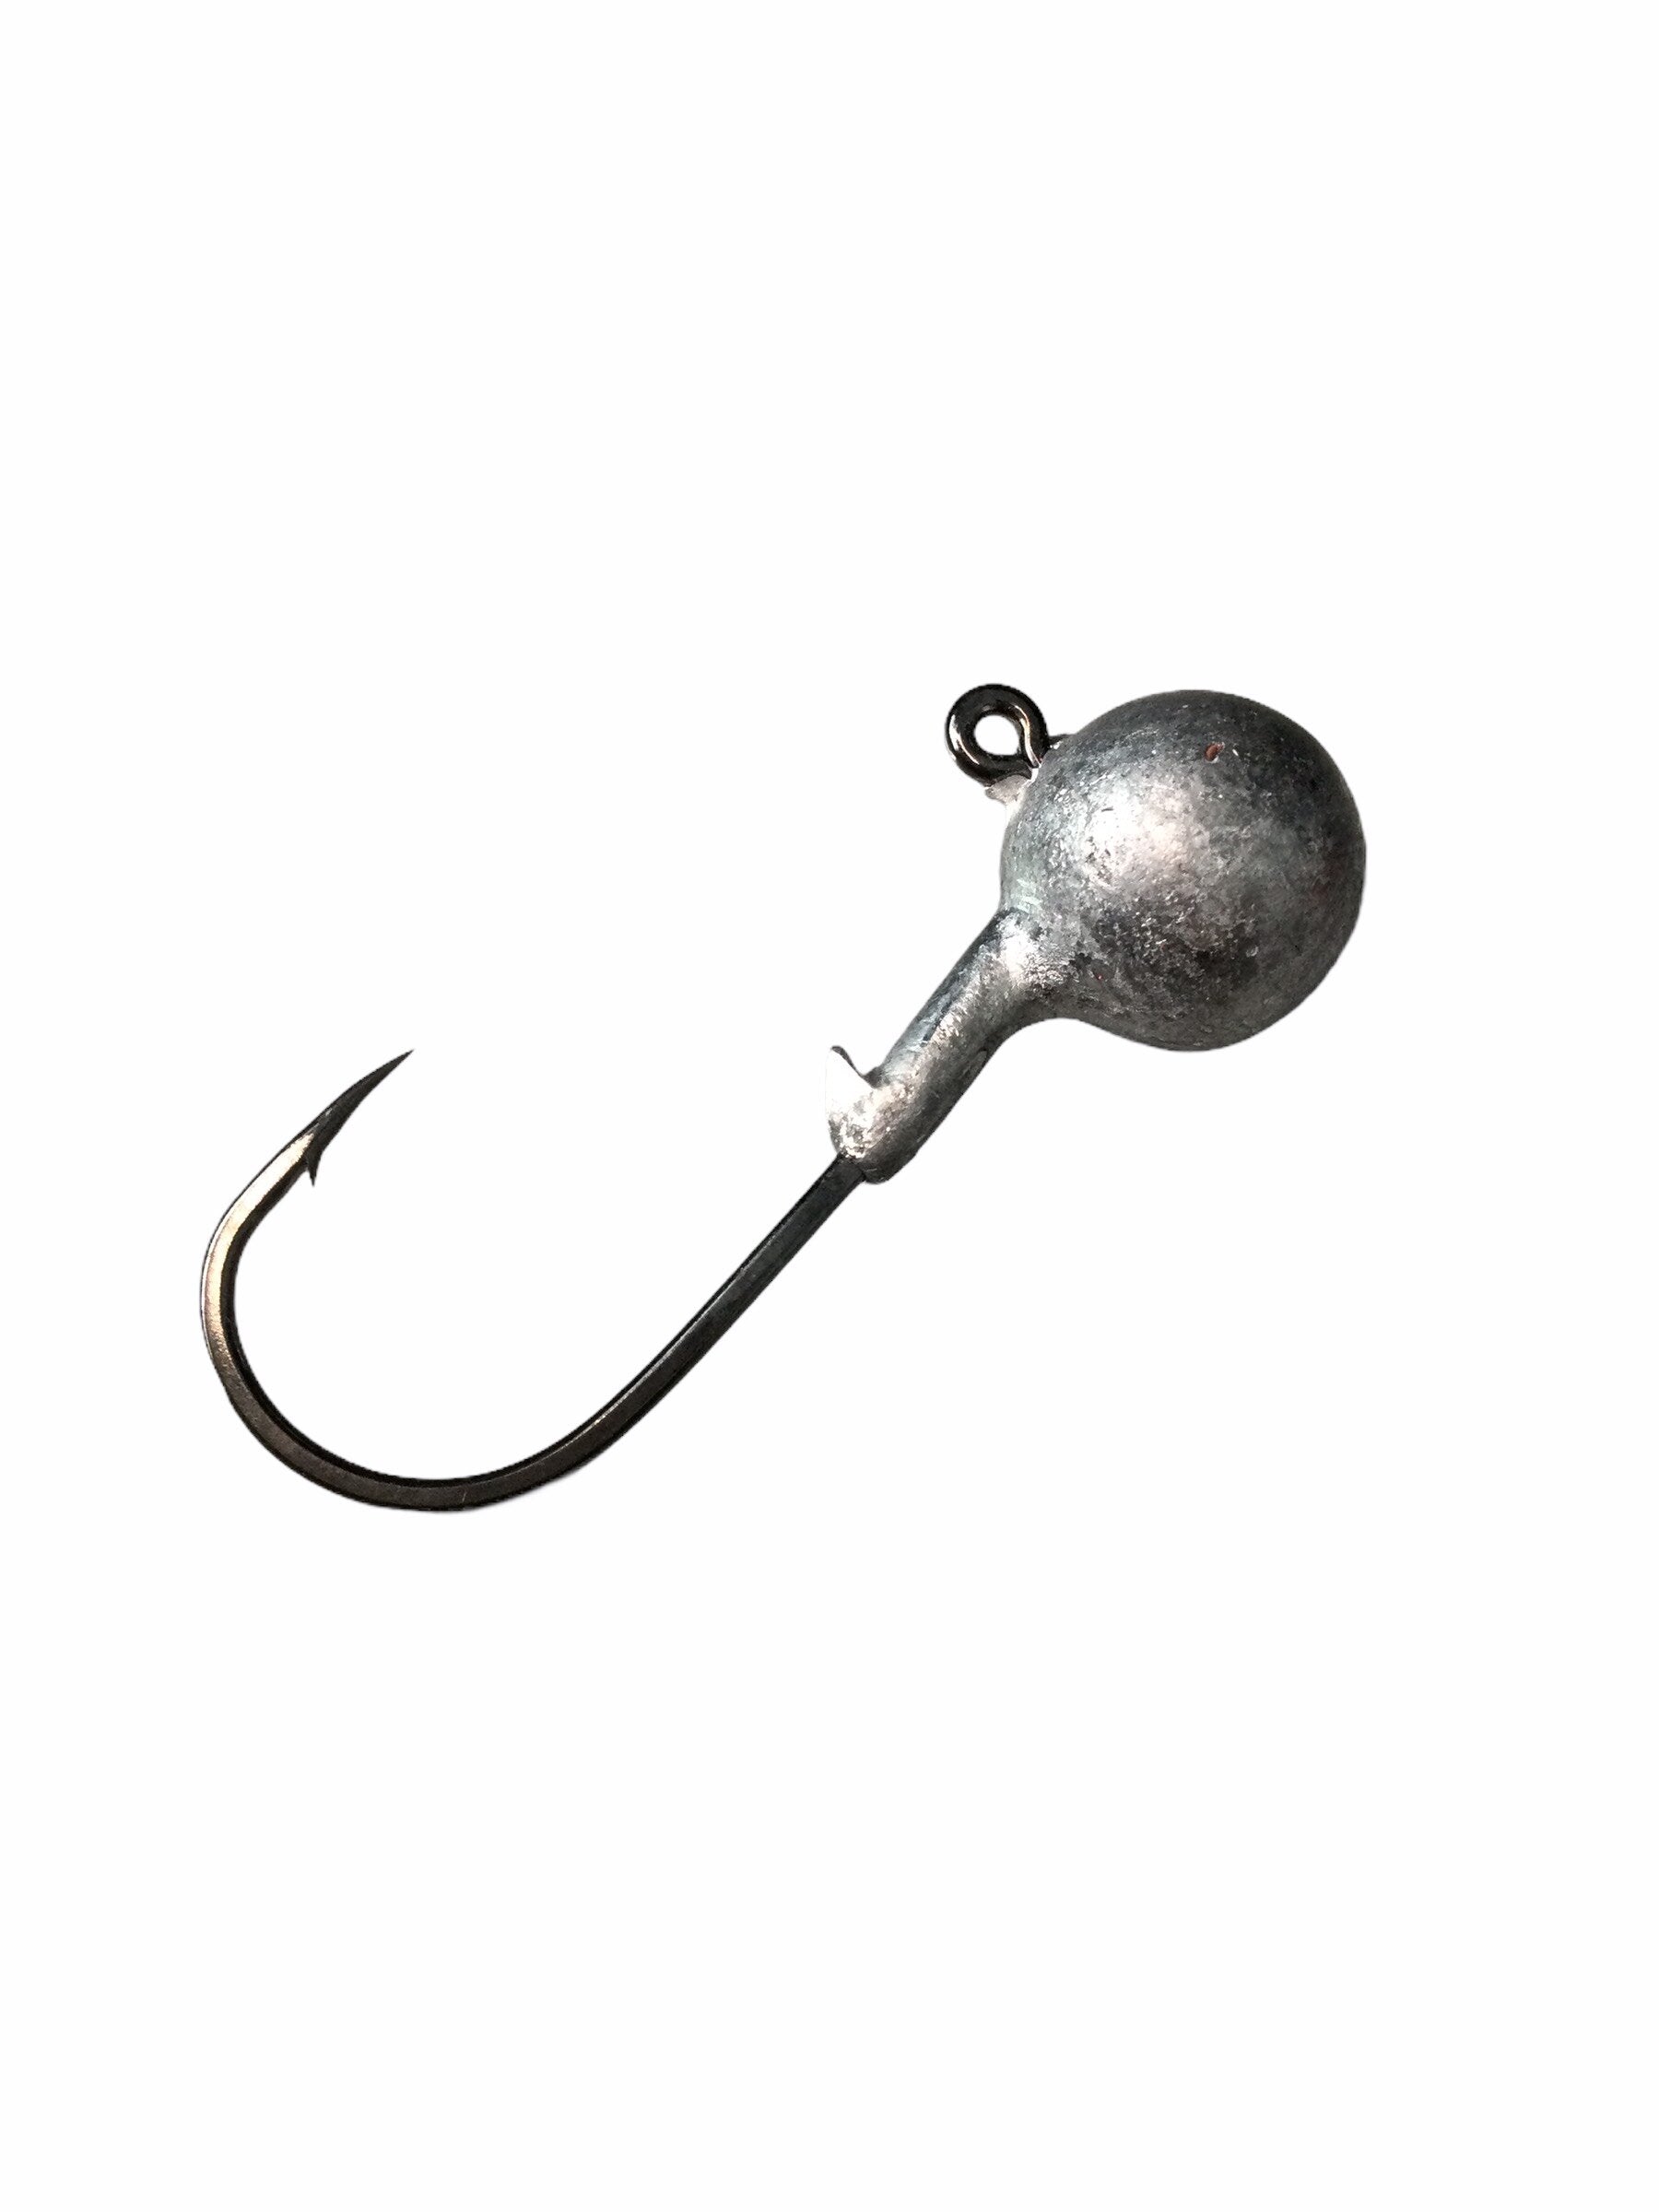 fishing hooks with line and swivel,jig heads,30pcs Fishing